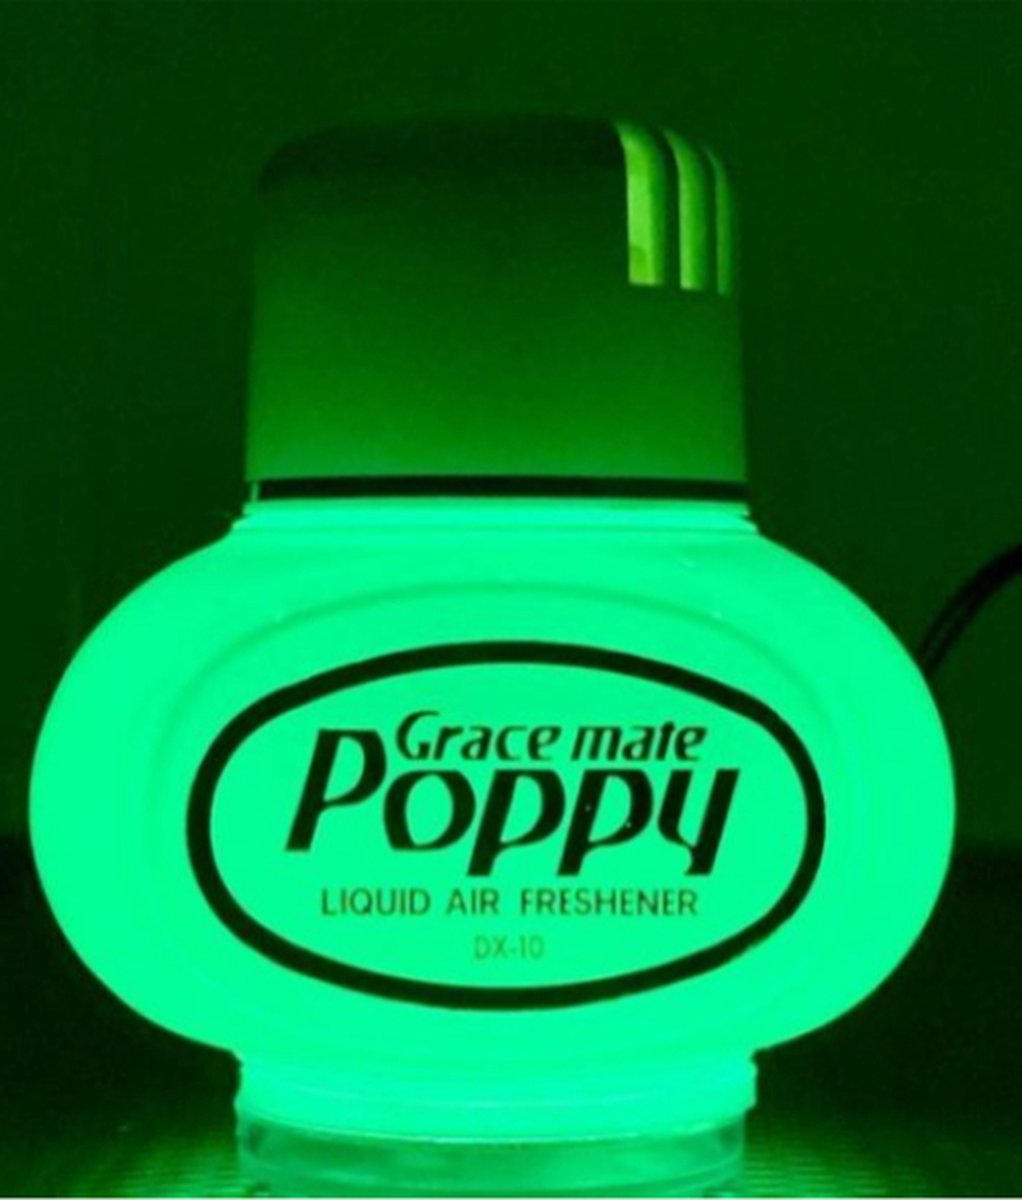 Poppy led verlichting 12/24V met aanstekerplug